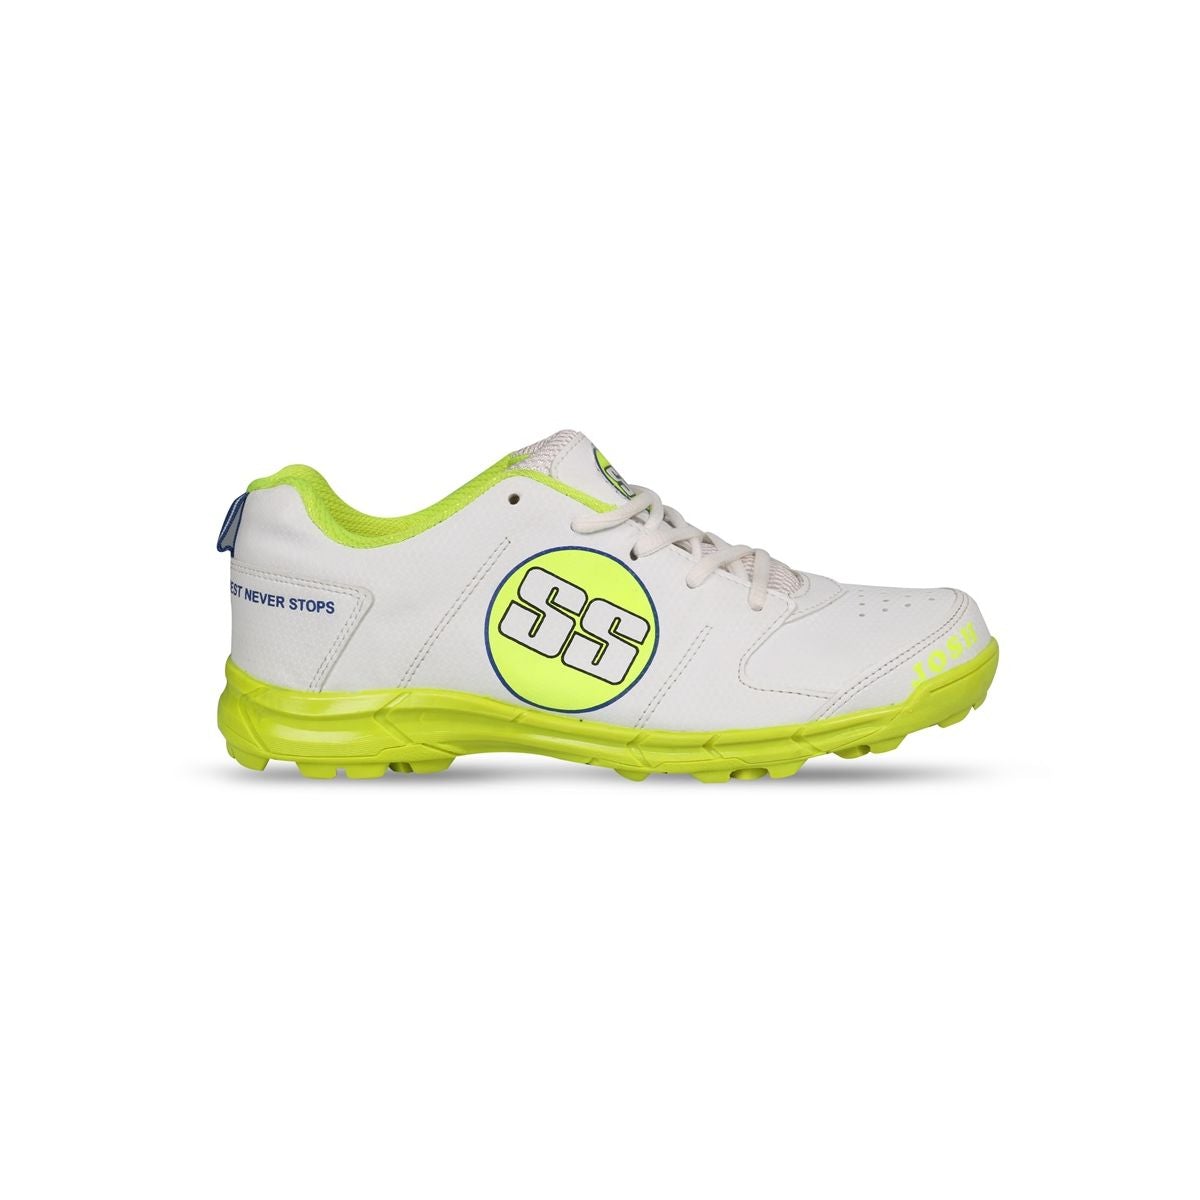 SS Josh Cricket Shoes - Lime-Cricket Shoes-Pro Sports